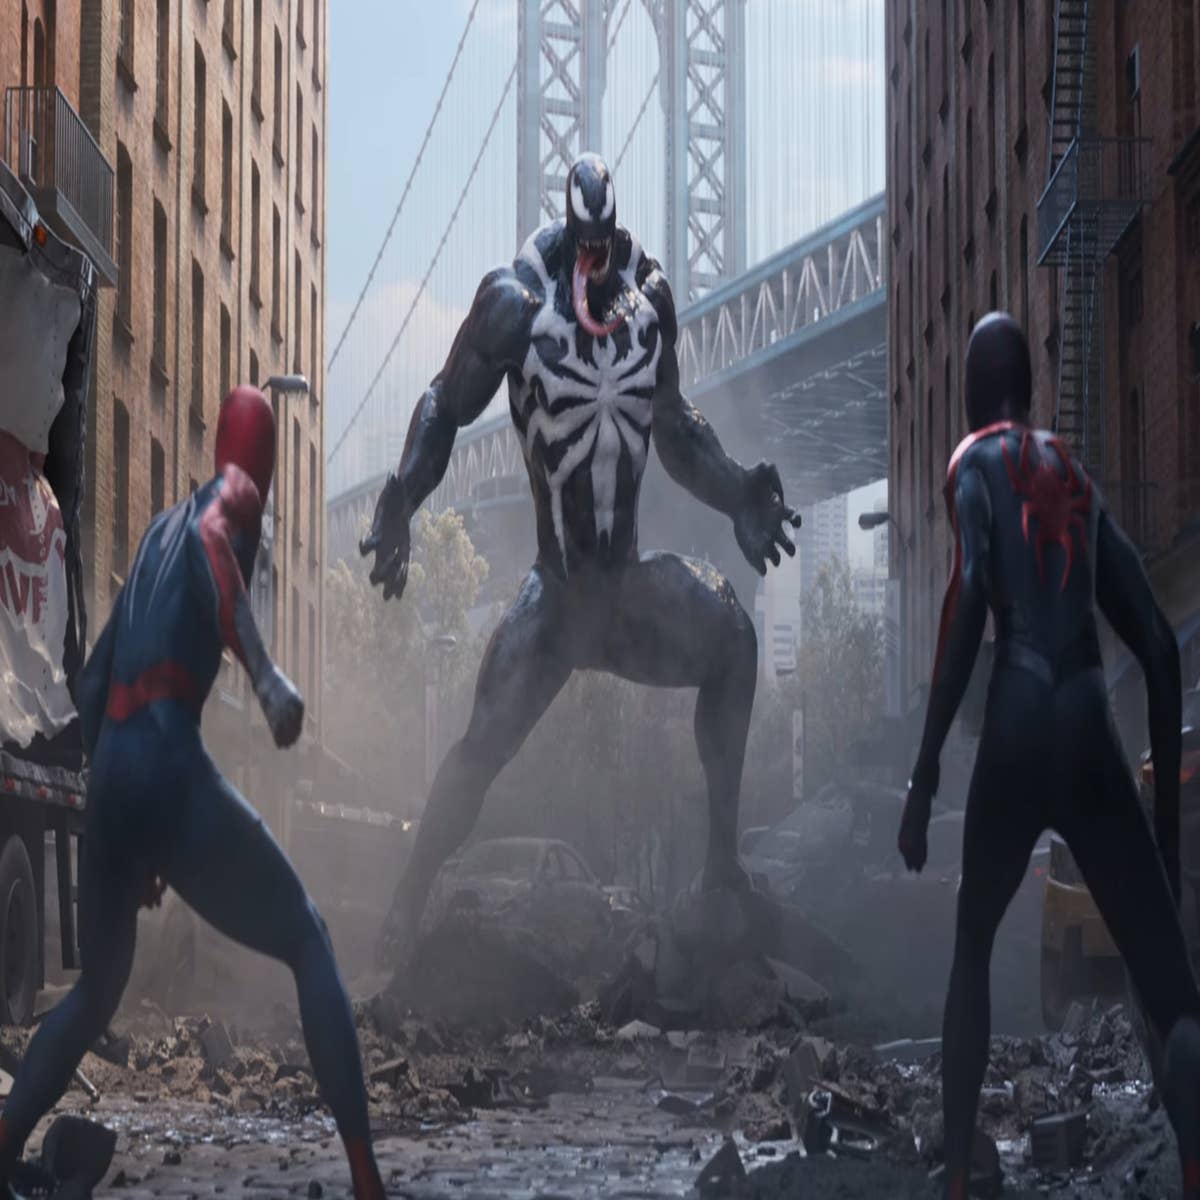 Marvel's Spider-Man 2 Release Date Announcement Trailer